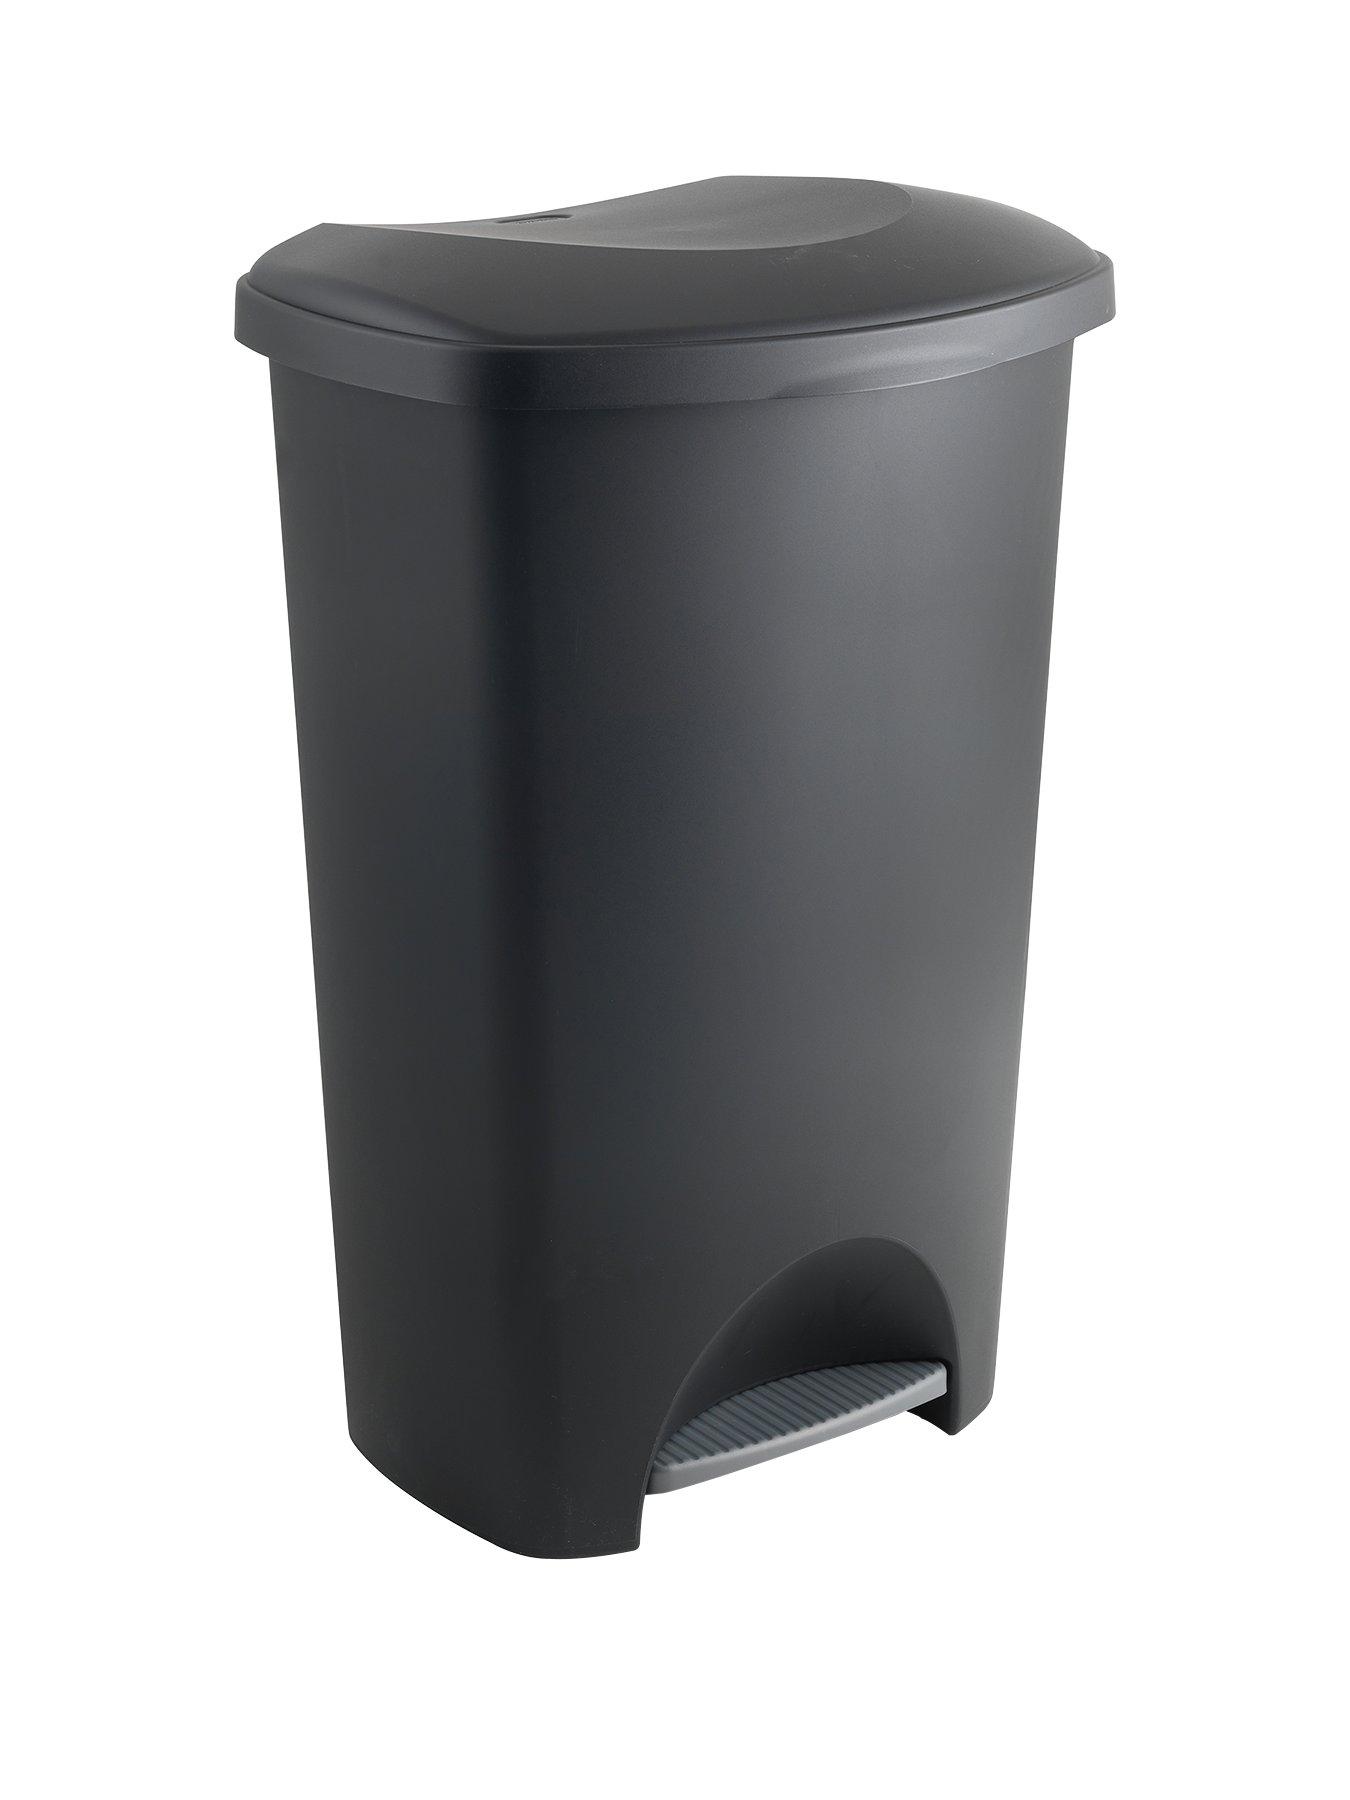 50 Litre 50L Plastic Recycle Recycling Bin with Flap Lid Kitchen Garden Waste Rubbbish Bins Dustbin Blue 